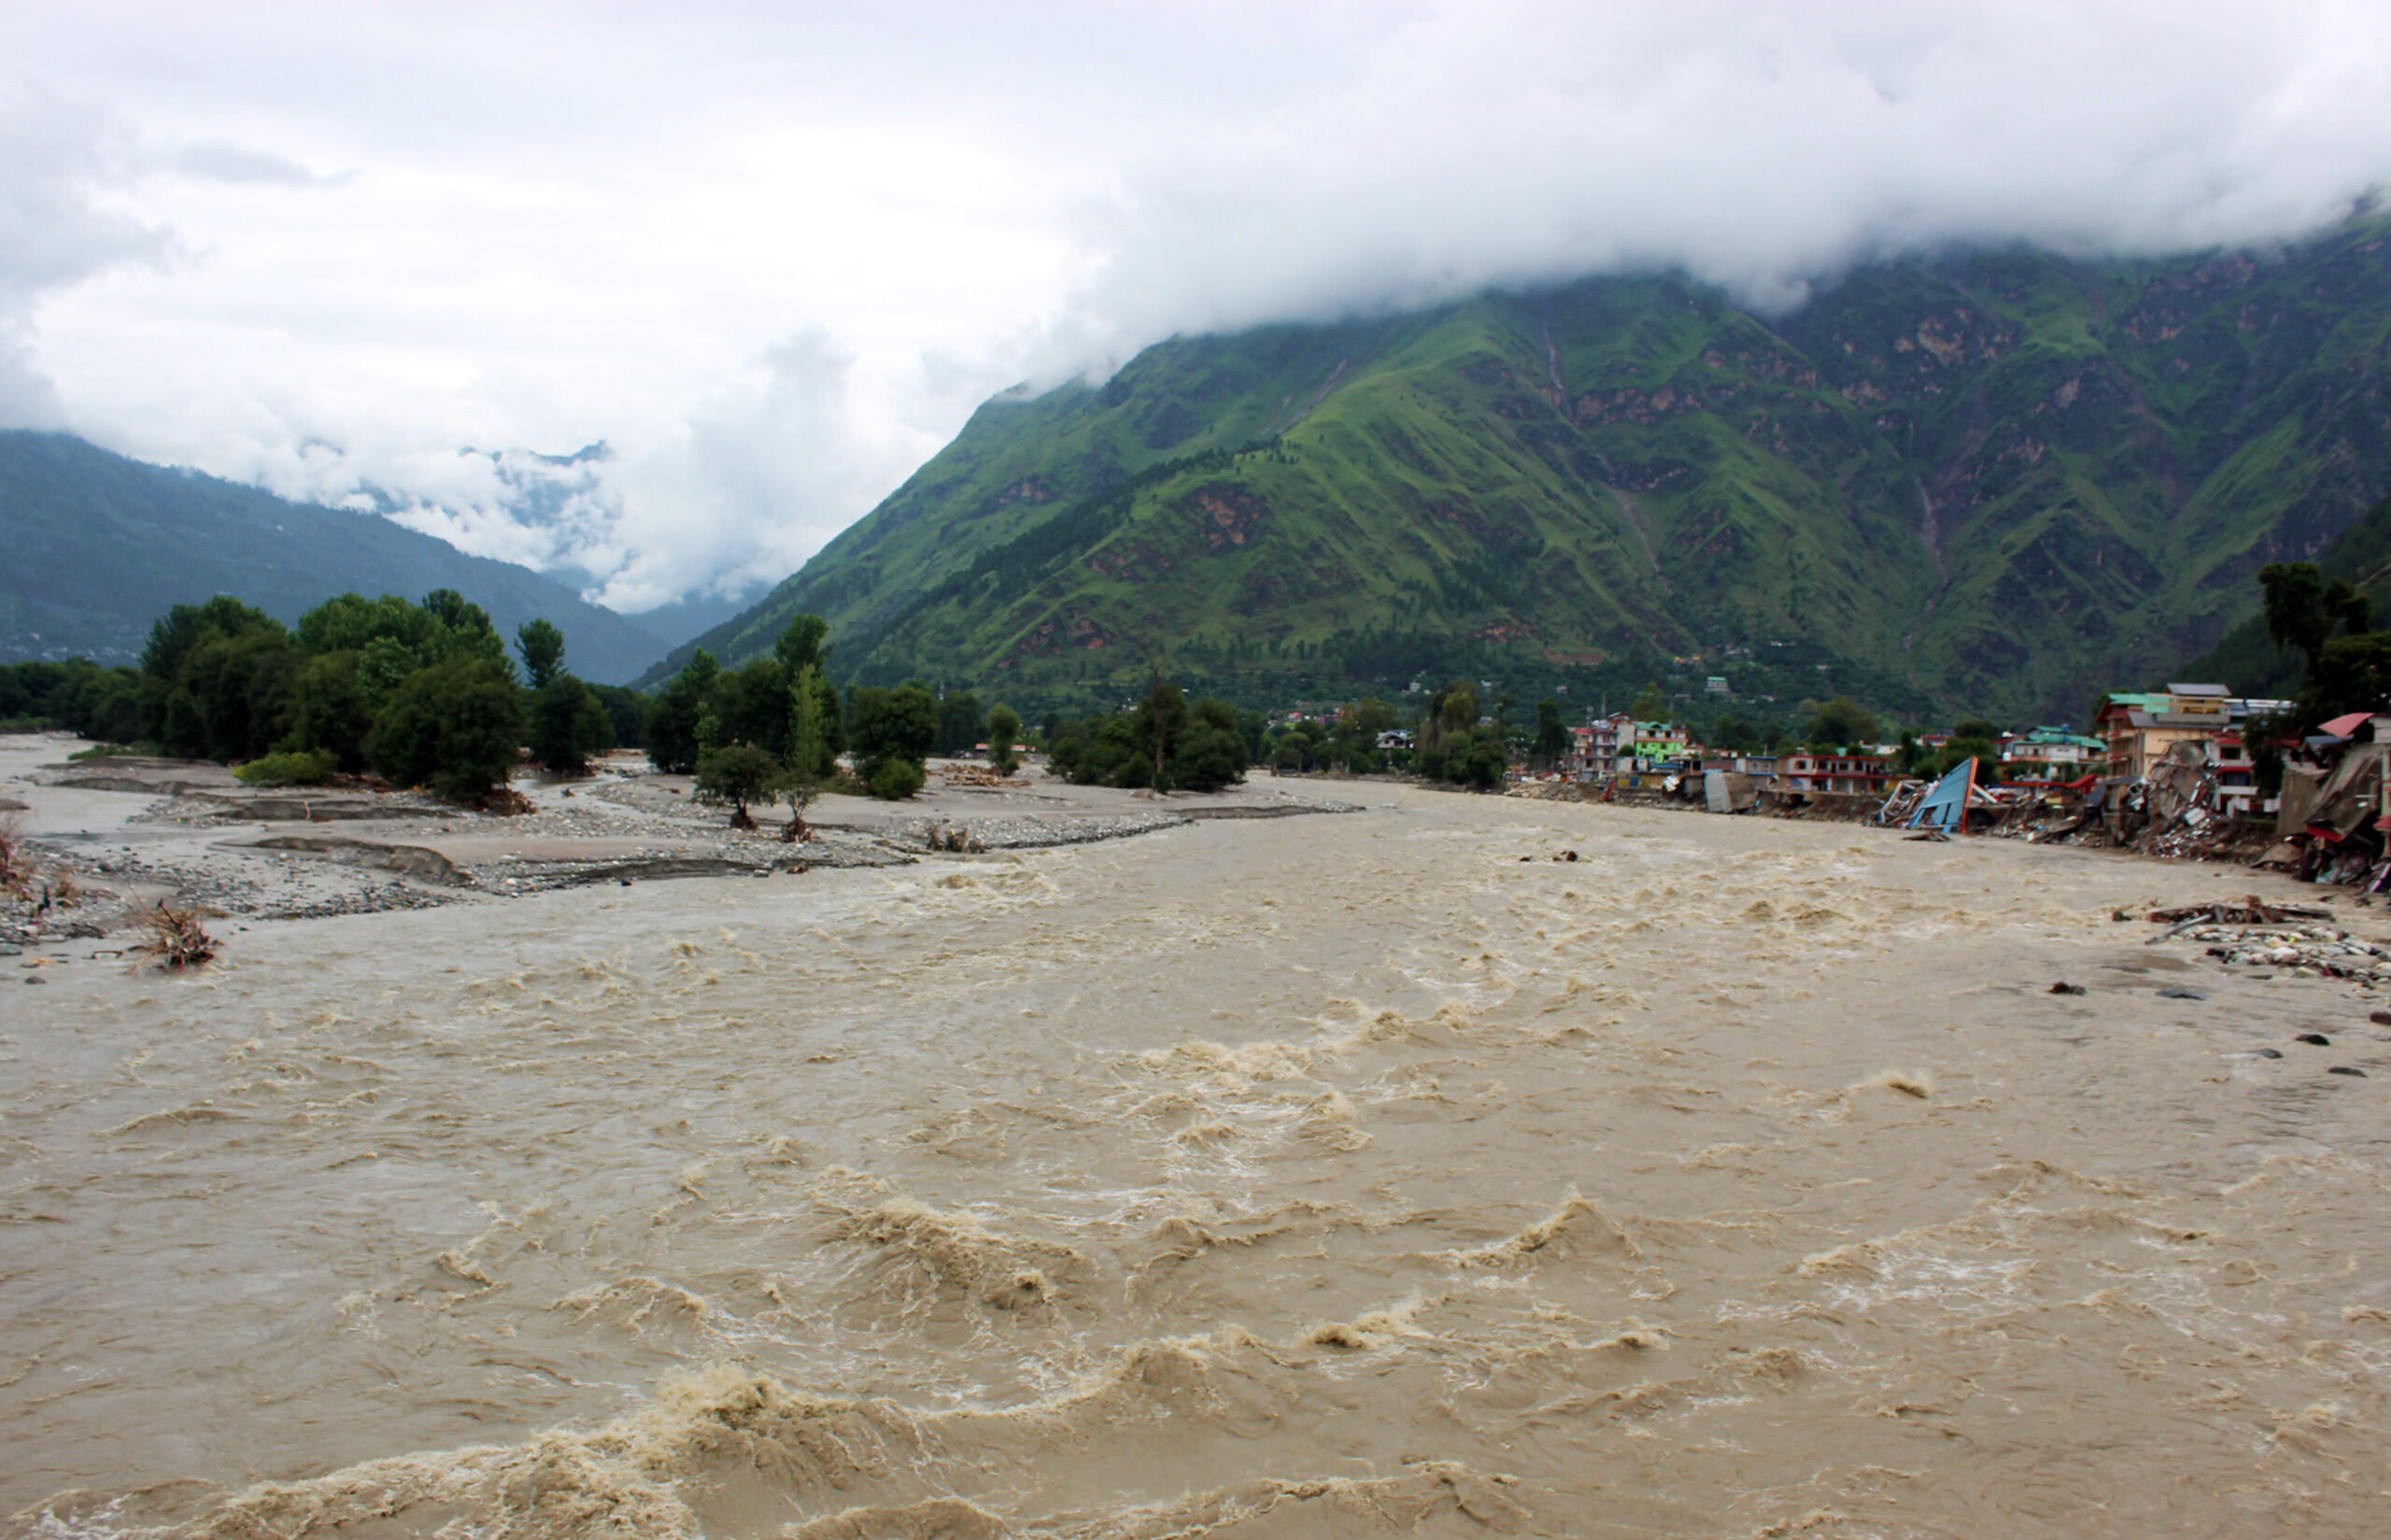 Himachal Pradesh: Kullu-Mandi Highway damaged after heavy rainfall, leaving stranded vehicles